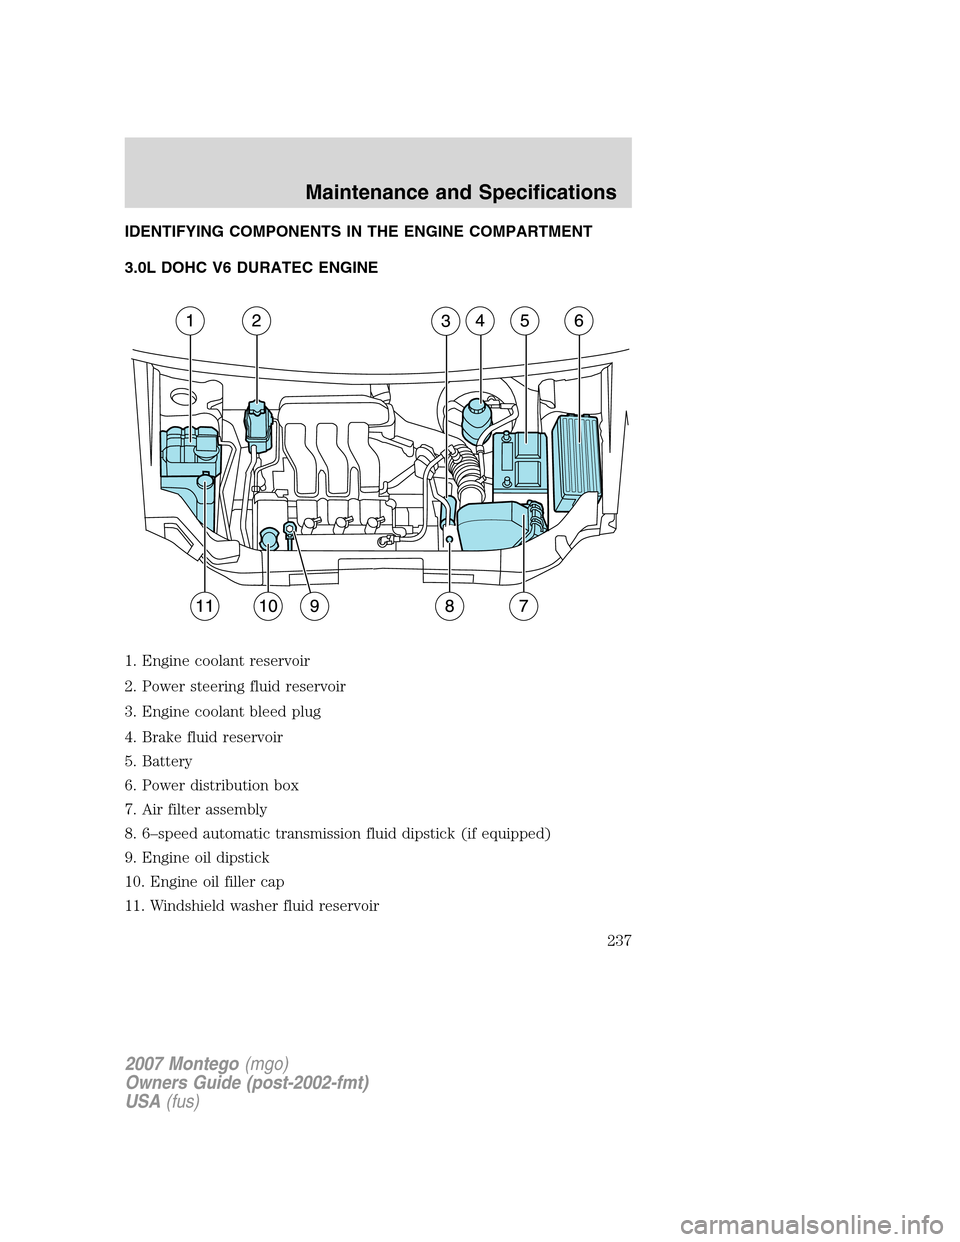 Mercury Montego 2007  Owners Manuals IDENTIFYING COMPONENTS IN THE ENGINE COMPARTMENT
3.0L DOHC V6 DURATEC ENGINE
1. Engine coolant reservoir
2. Power steering fluid reservoir
3. Engine coolant bleed plug
4. Brake fluid reservoir
5. Batt